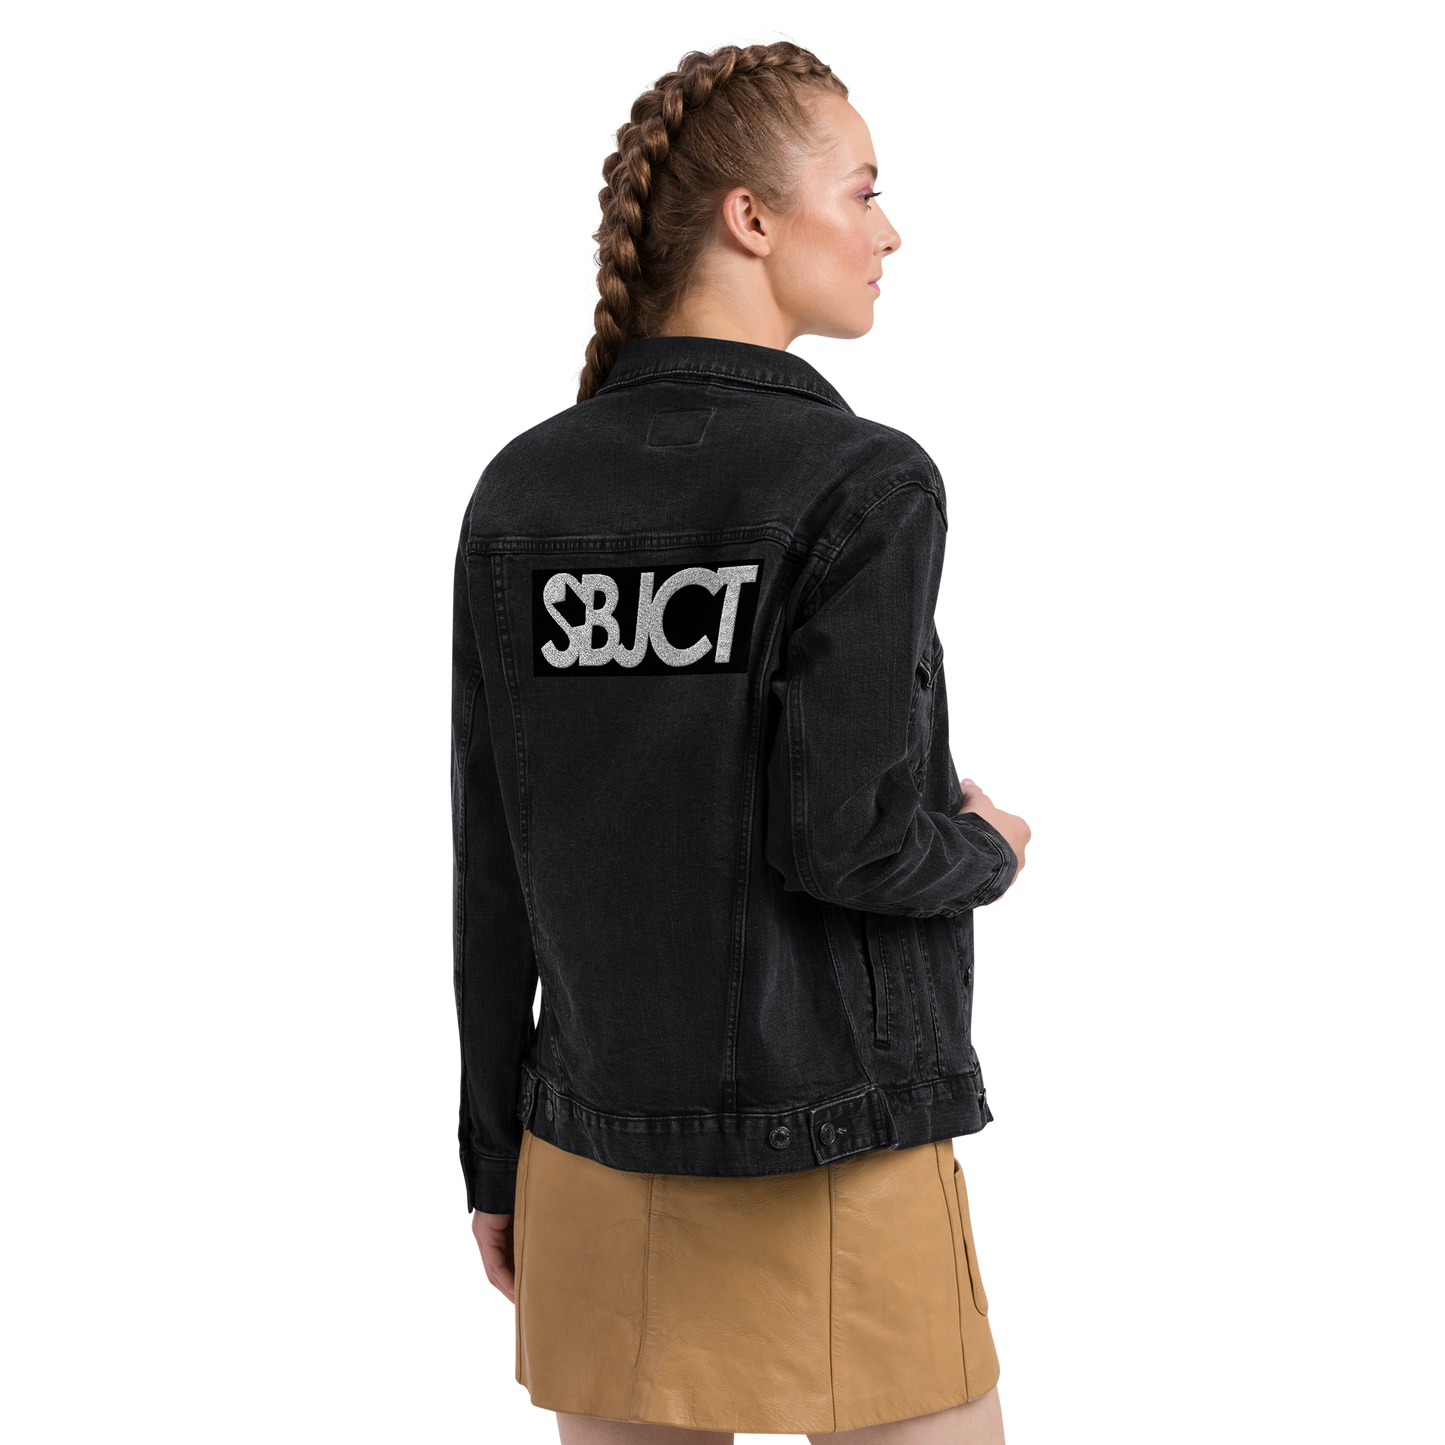 SBJCT Unisex denim jacket